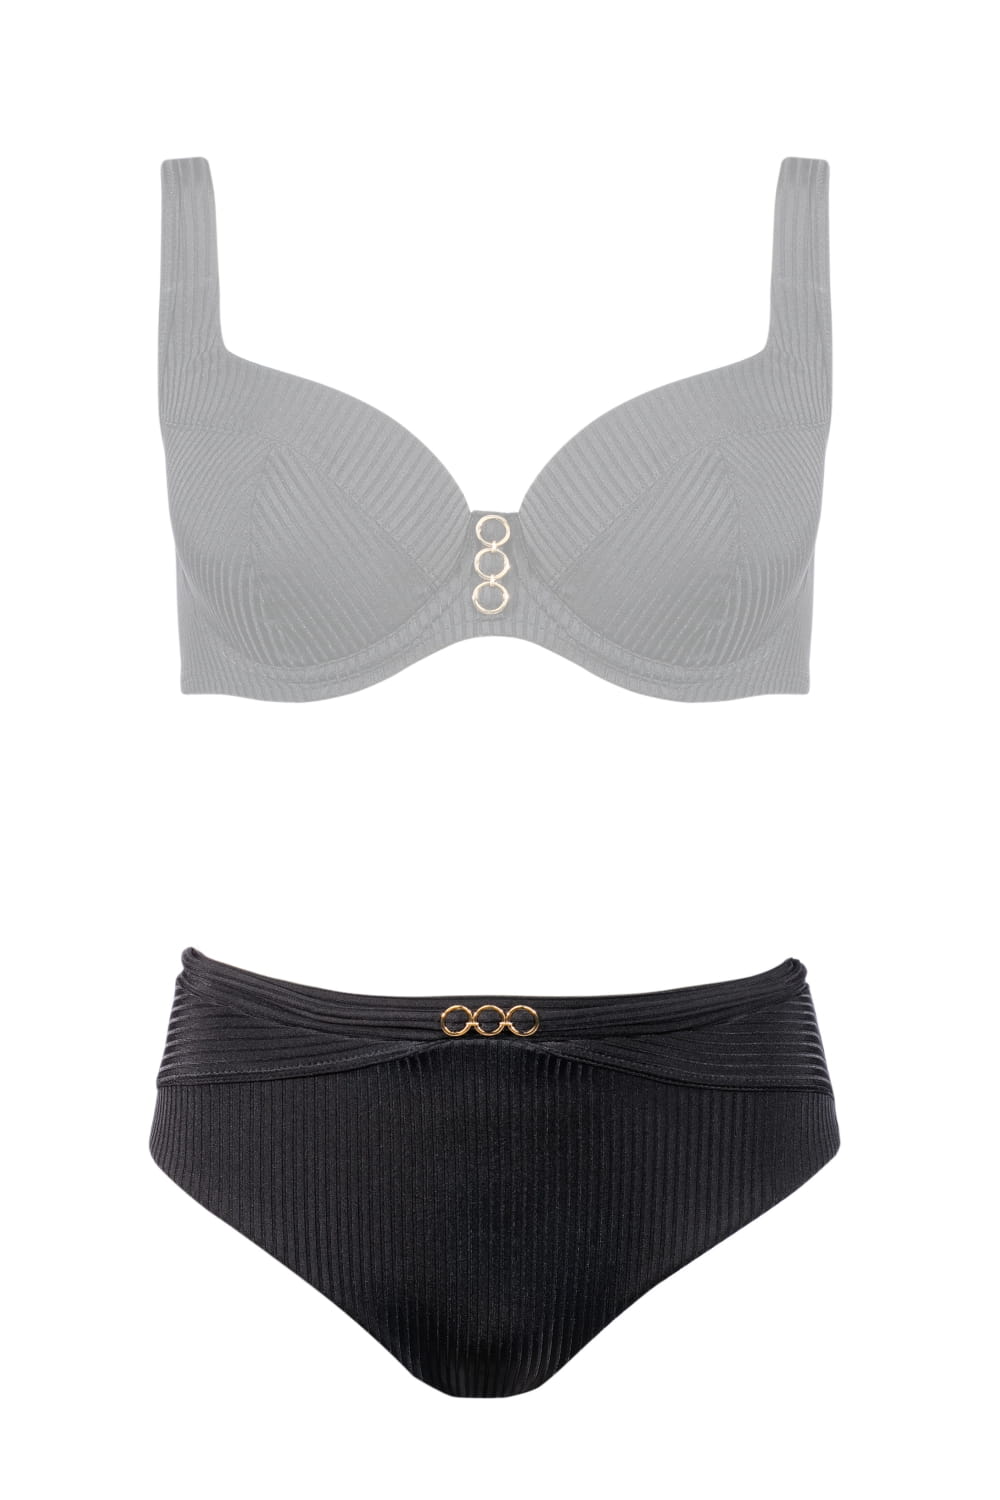 Axami Luxury Swimwear FD04E High Waist Bikini Bottom Black